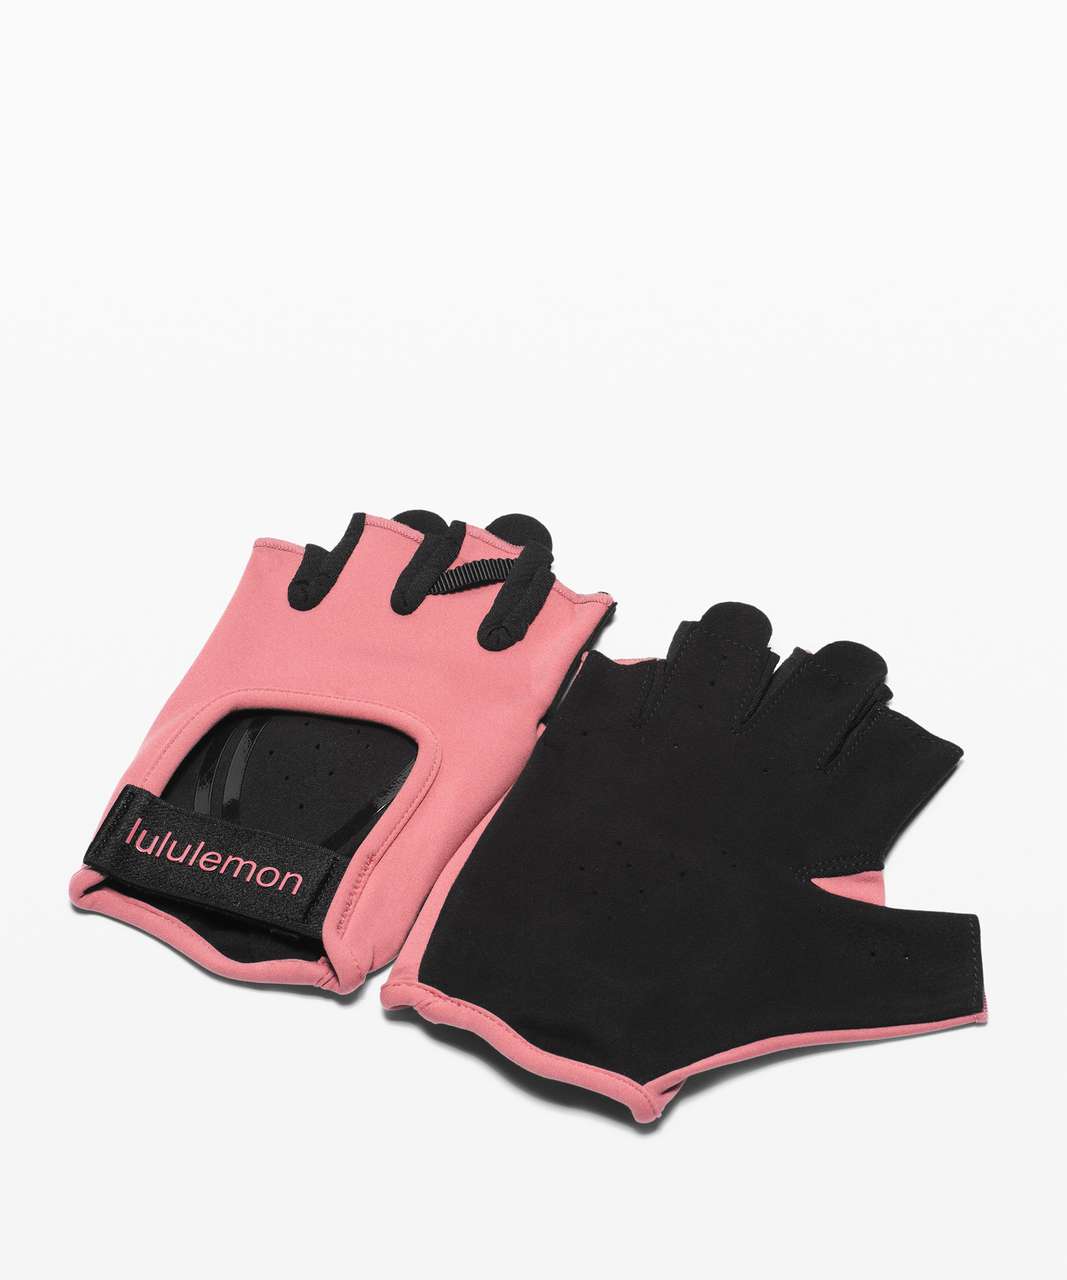 Lululemon Uplift Training Gloves - Brier Rose / Black